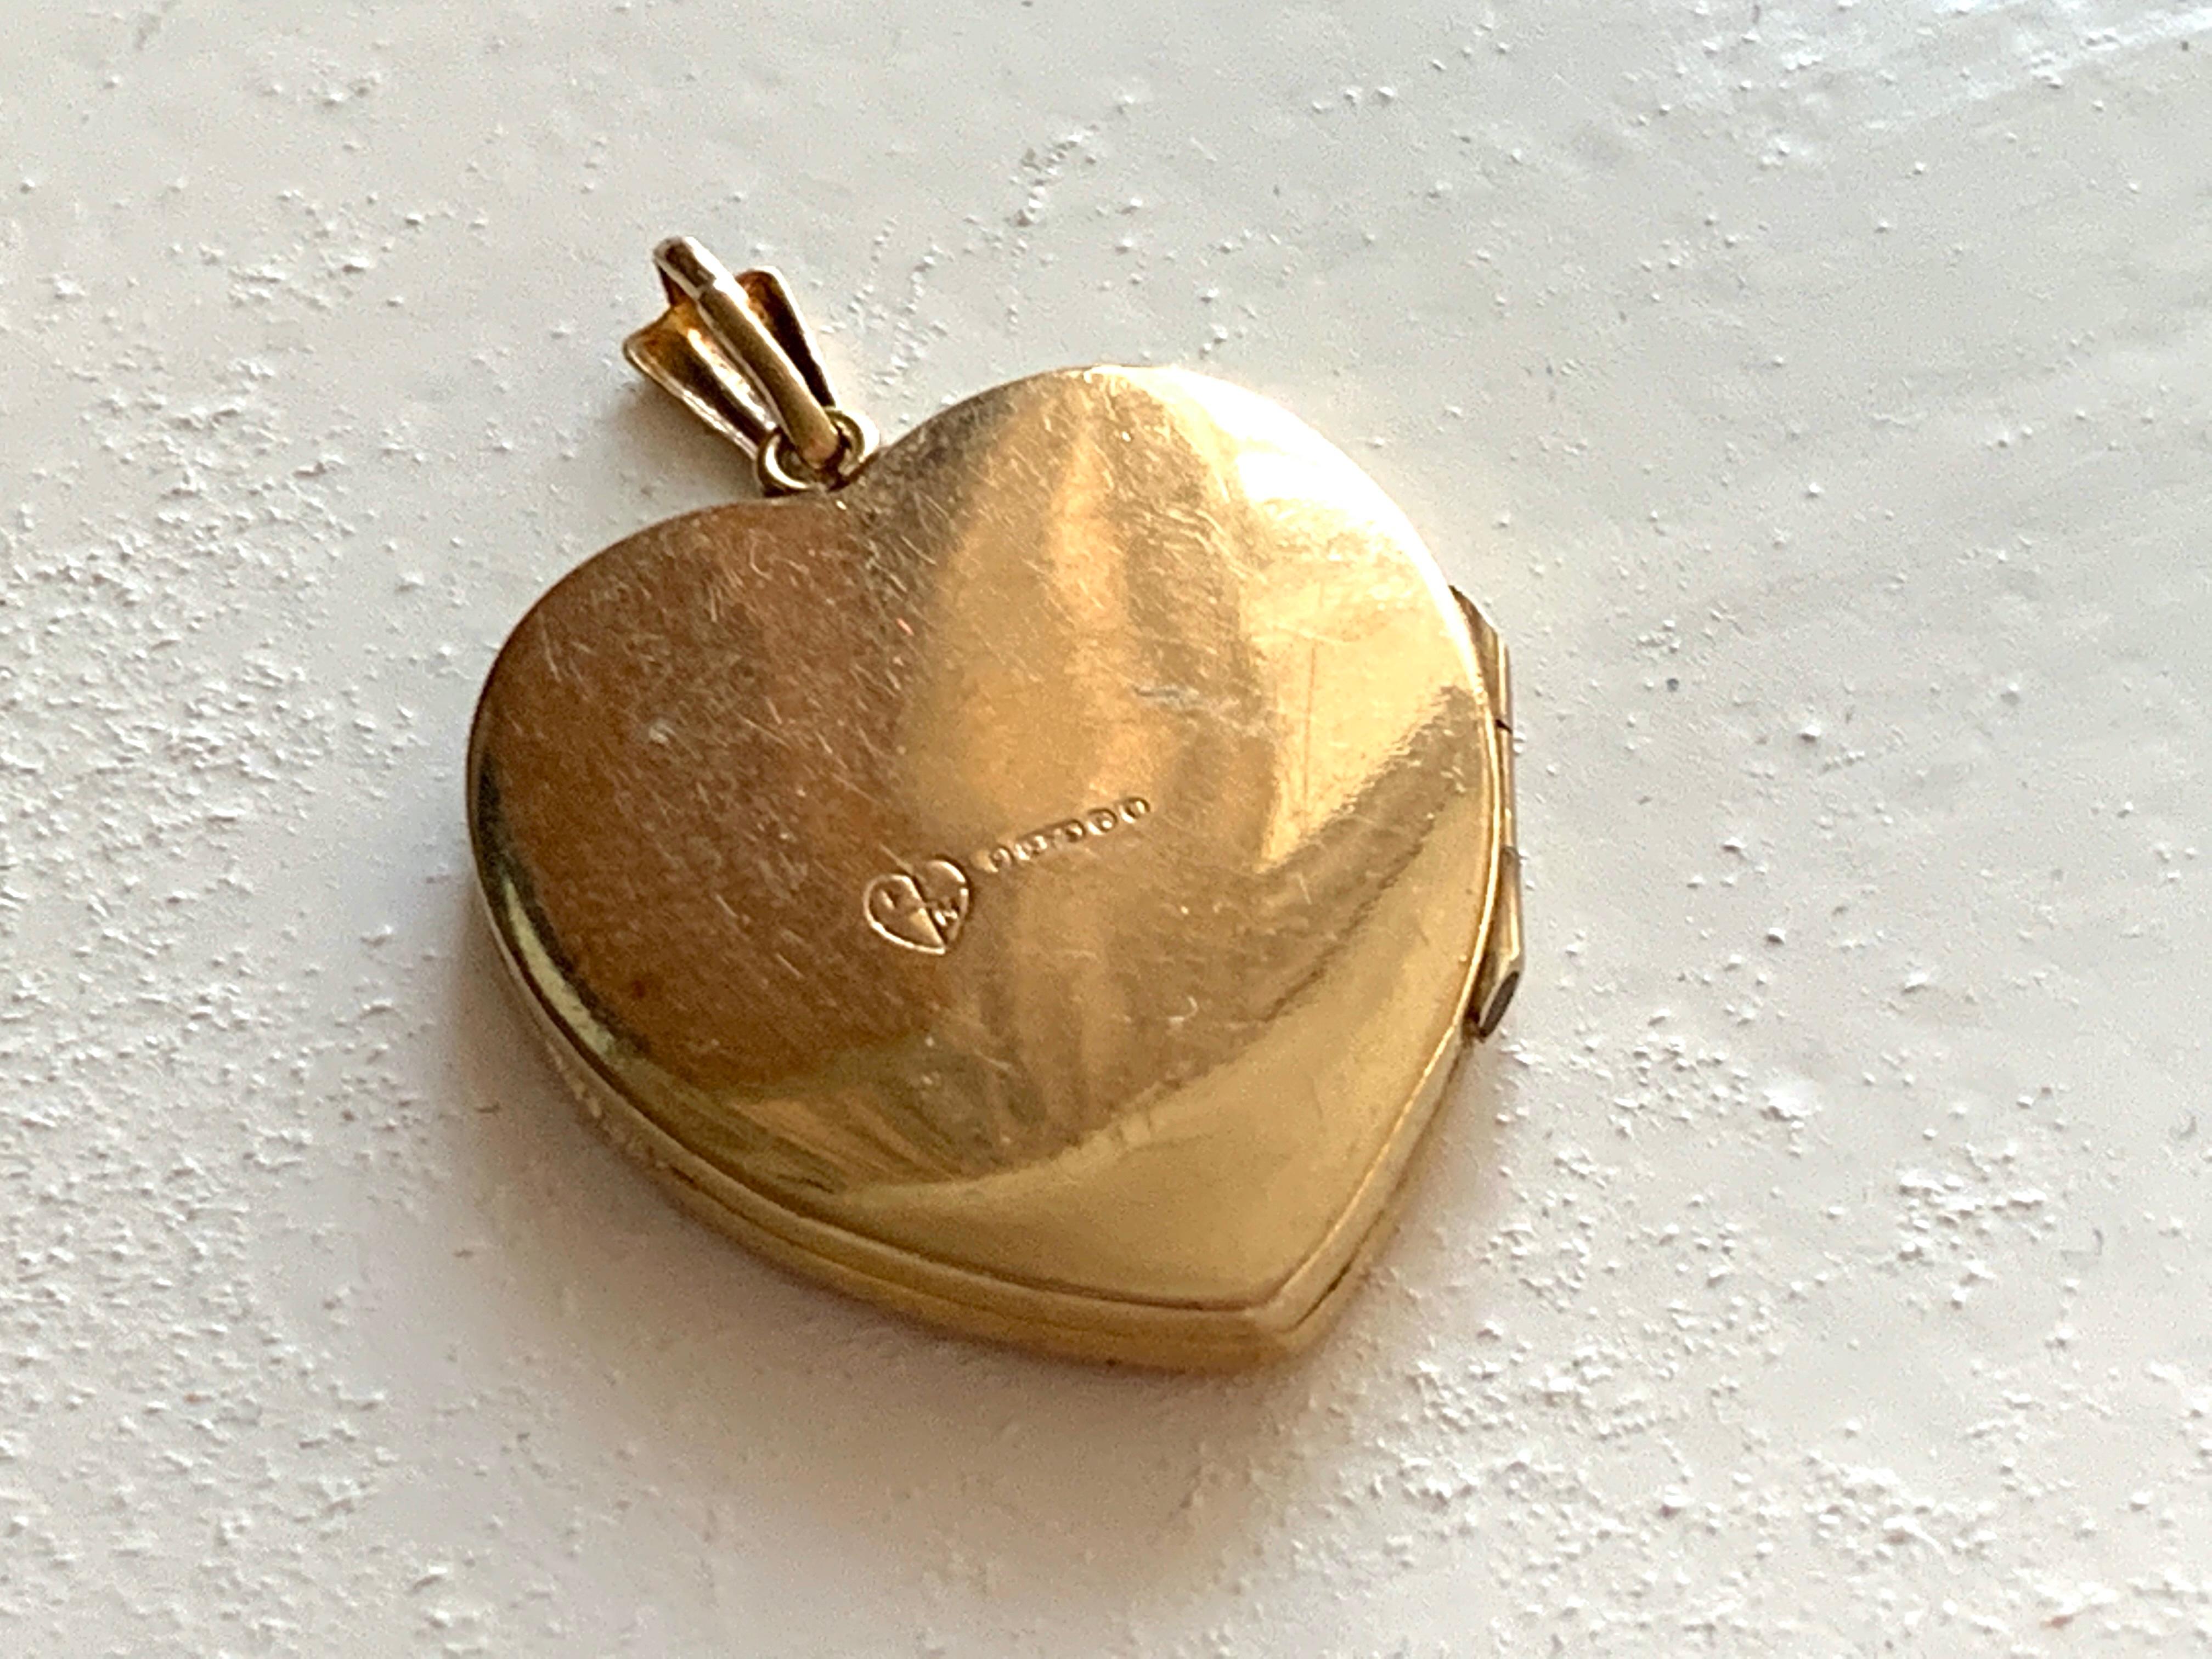 9ct gold locket necklace